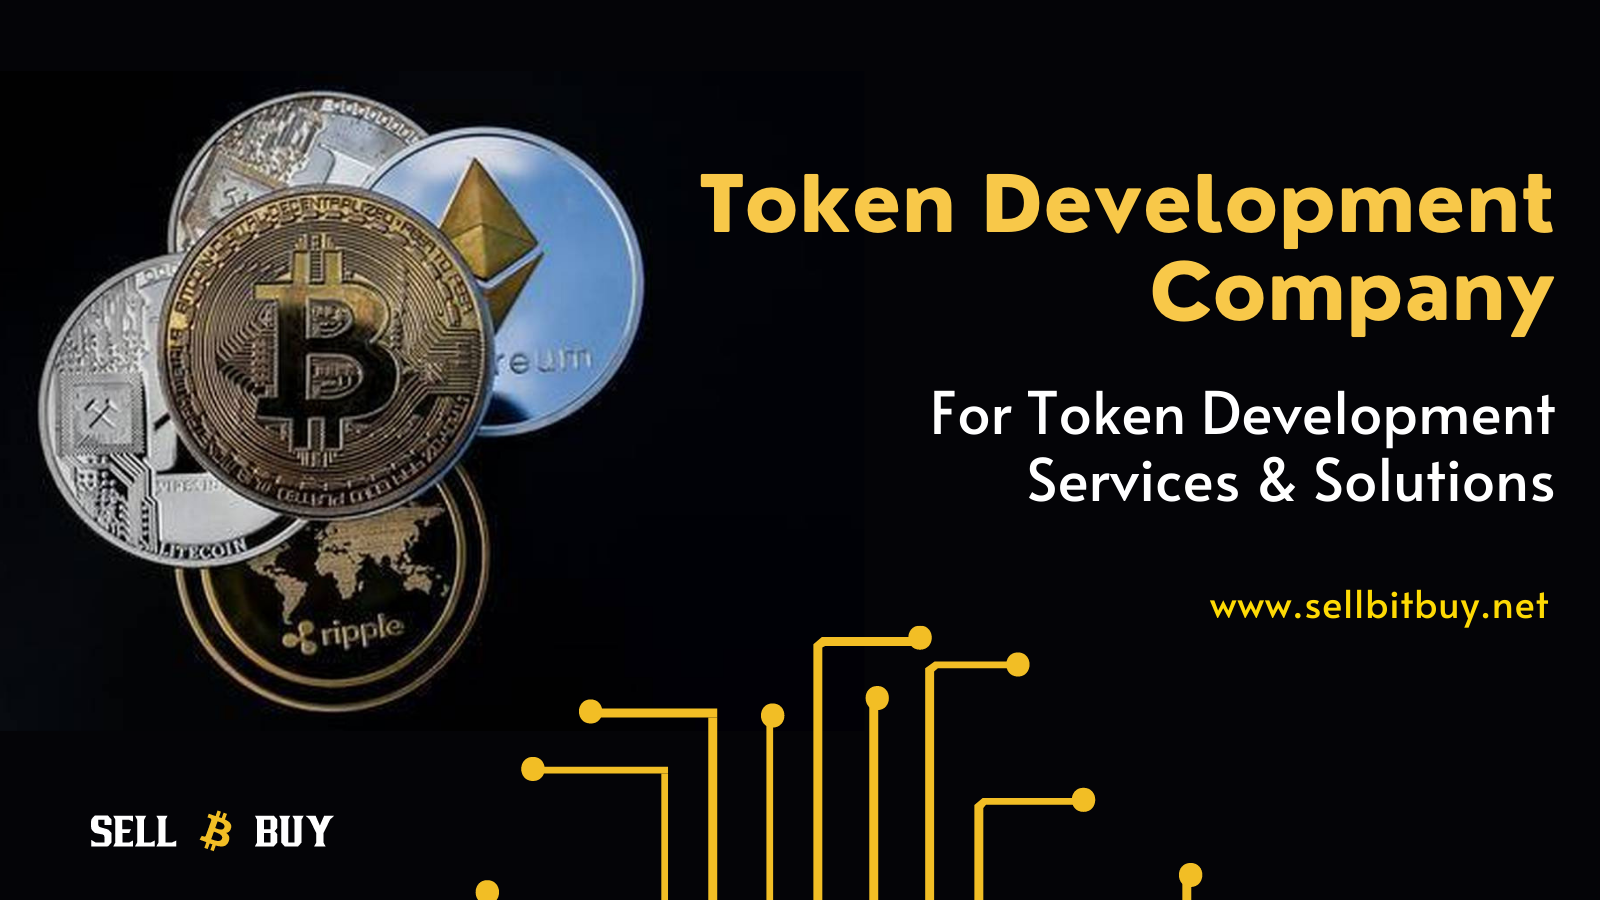 Token Development Company For Token Development Services & Solutions